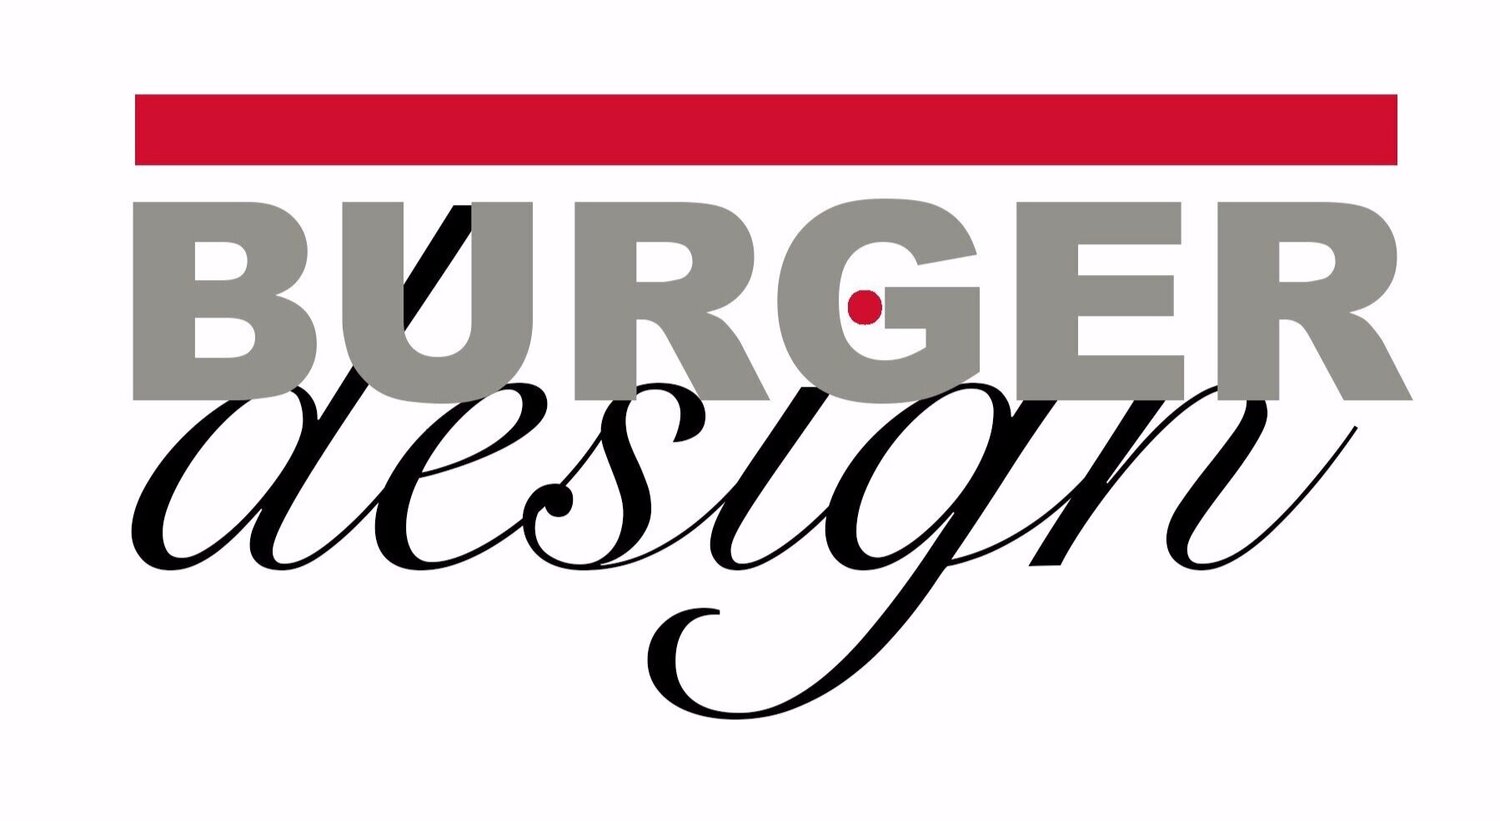 Burger Design